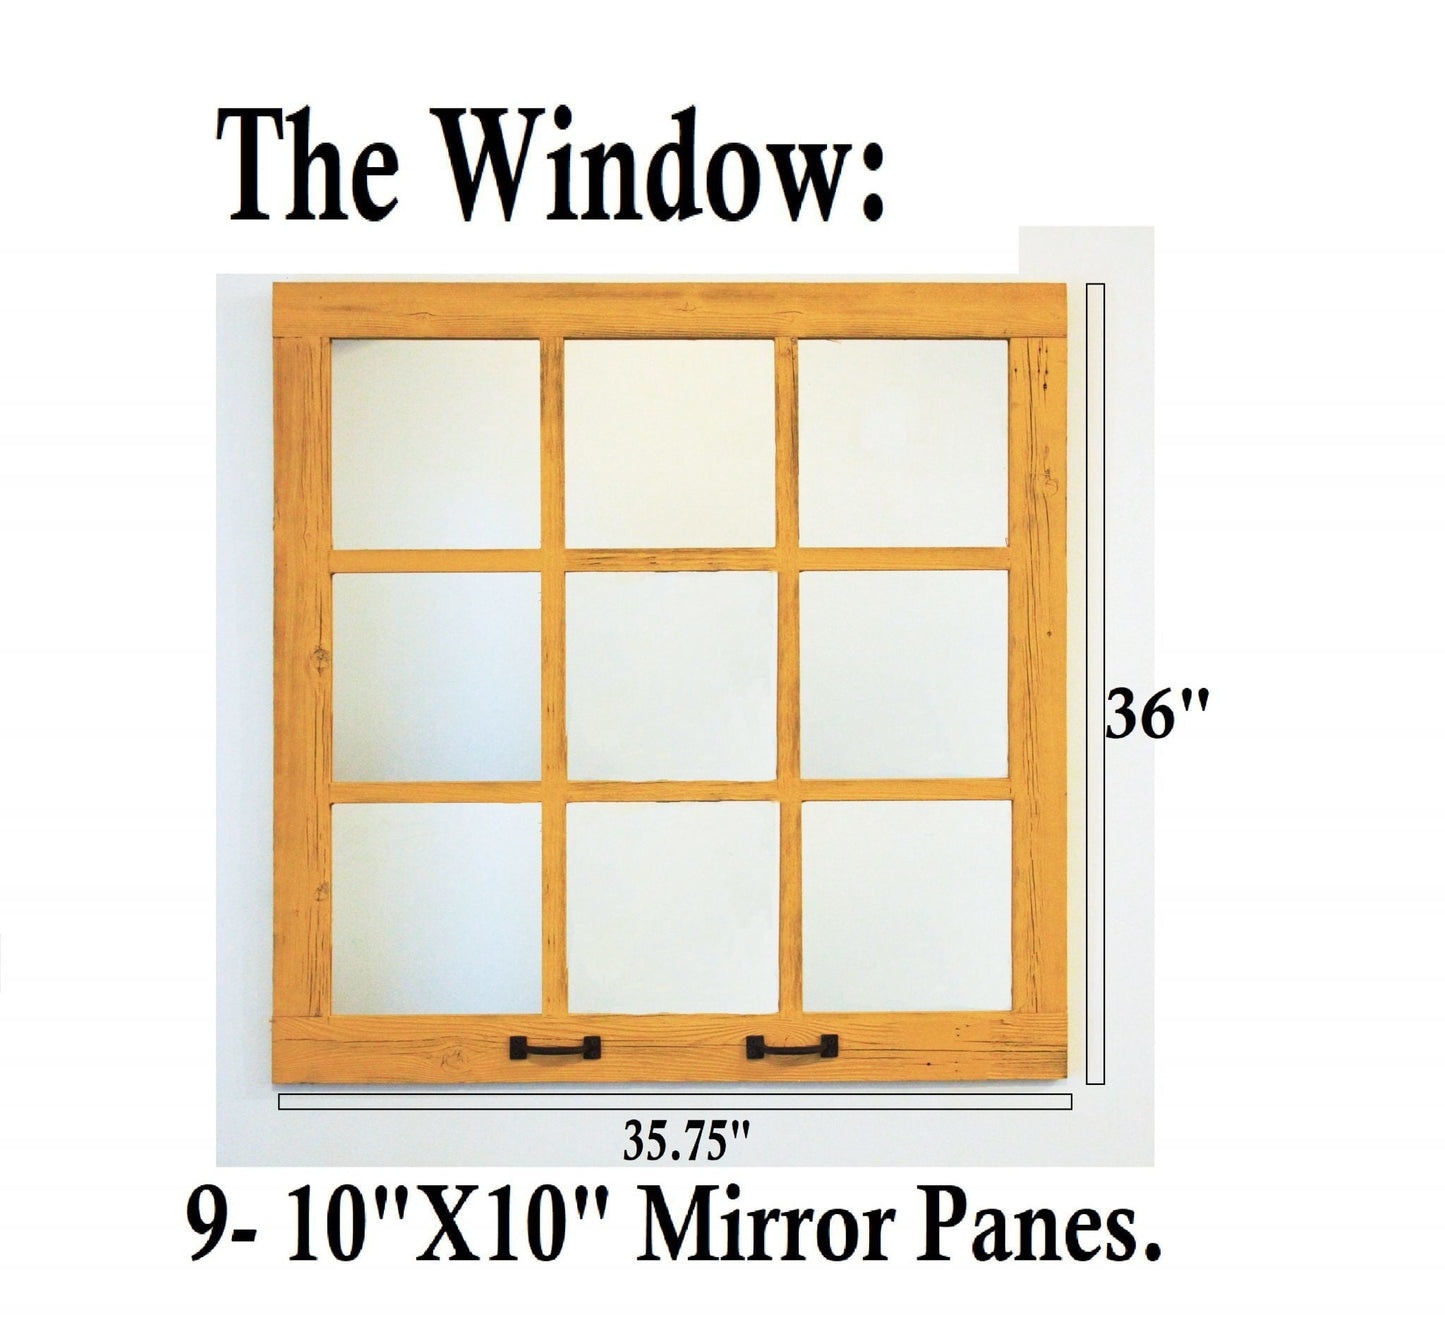 Reclaimed Barnwood Square Paned Window Mirror - 36" size